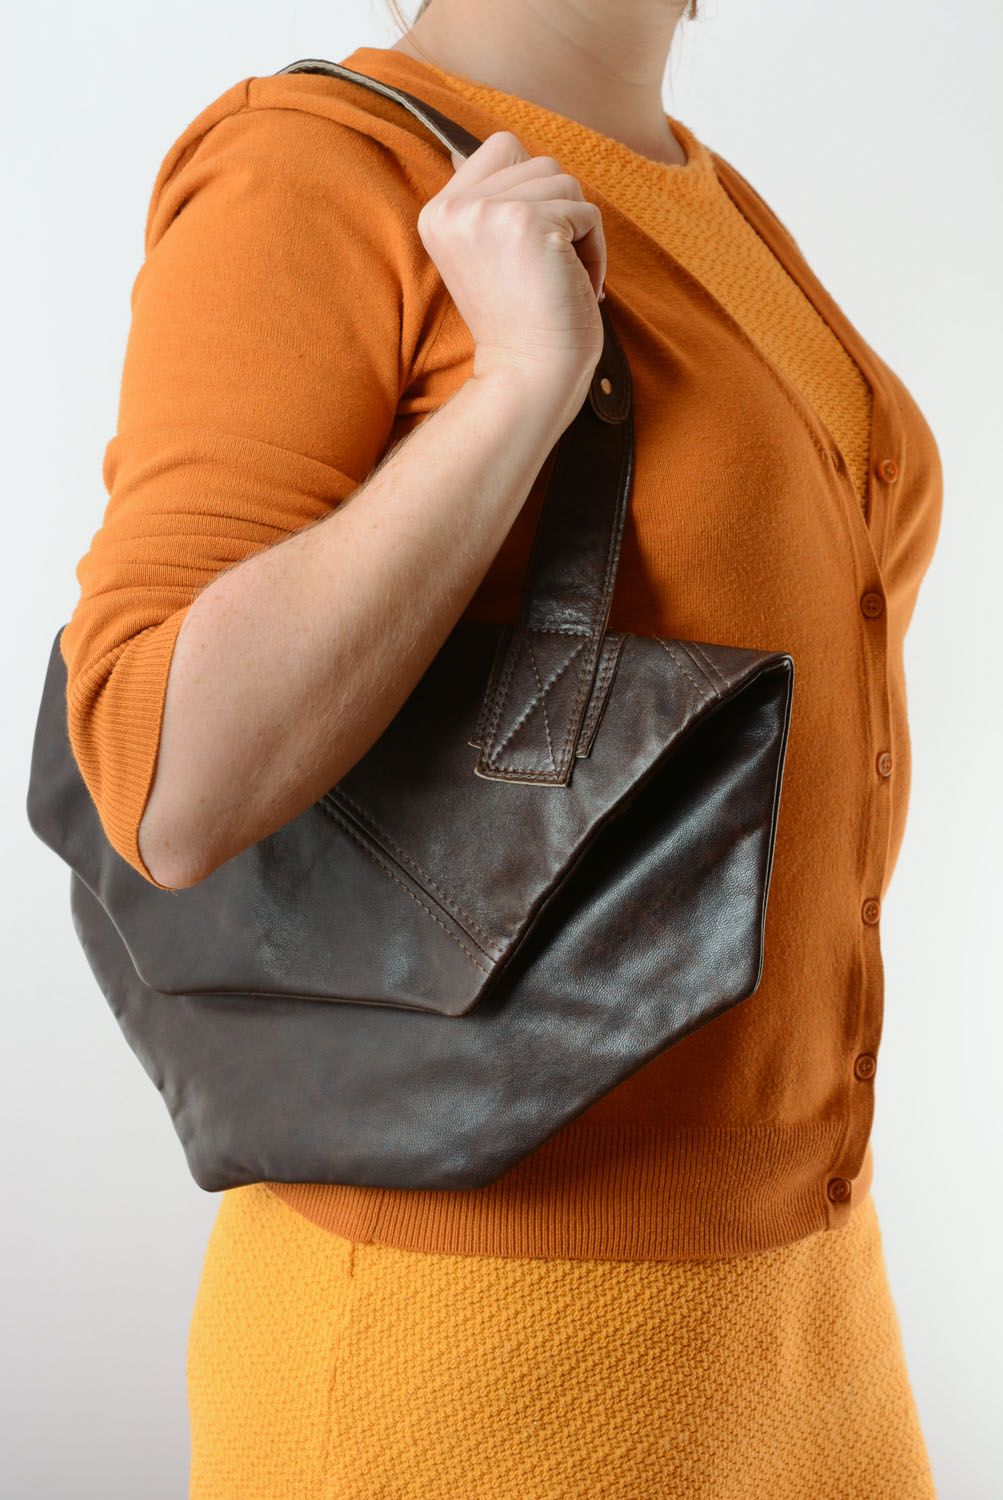 Sac féminin en cuir fait main accessoire design original brun Géométrie photo 1